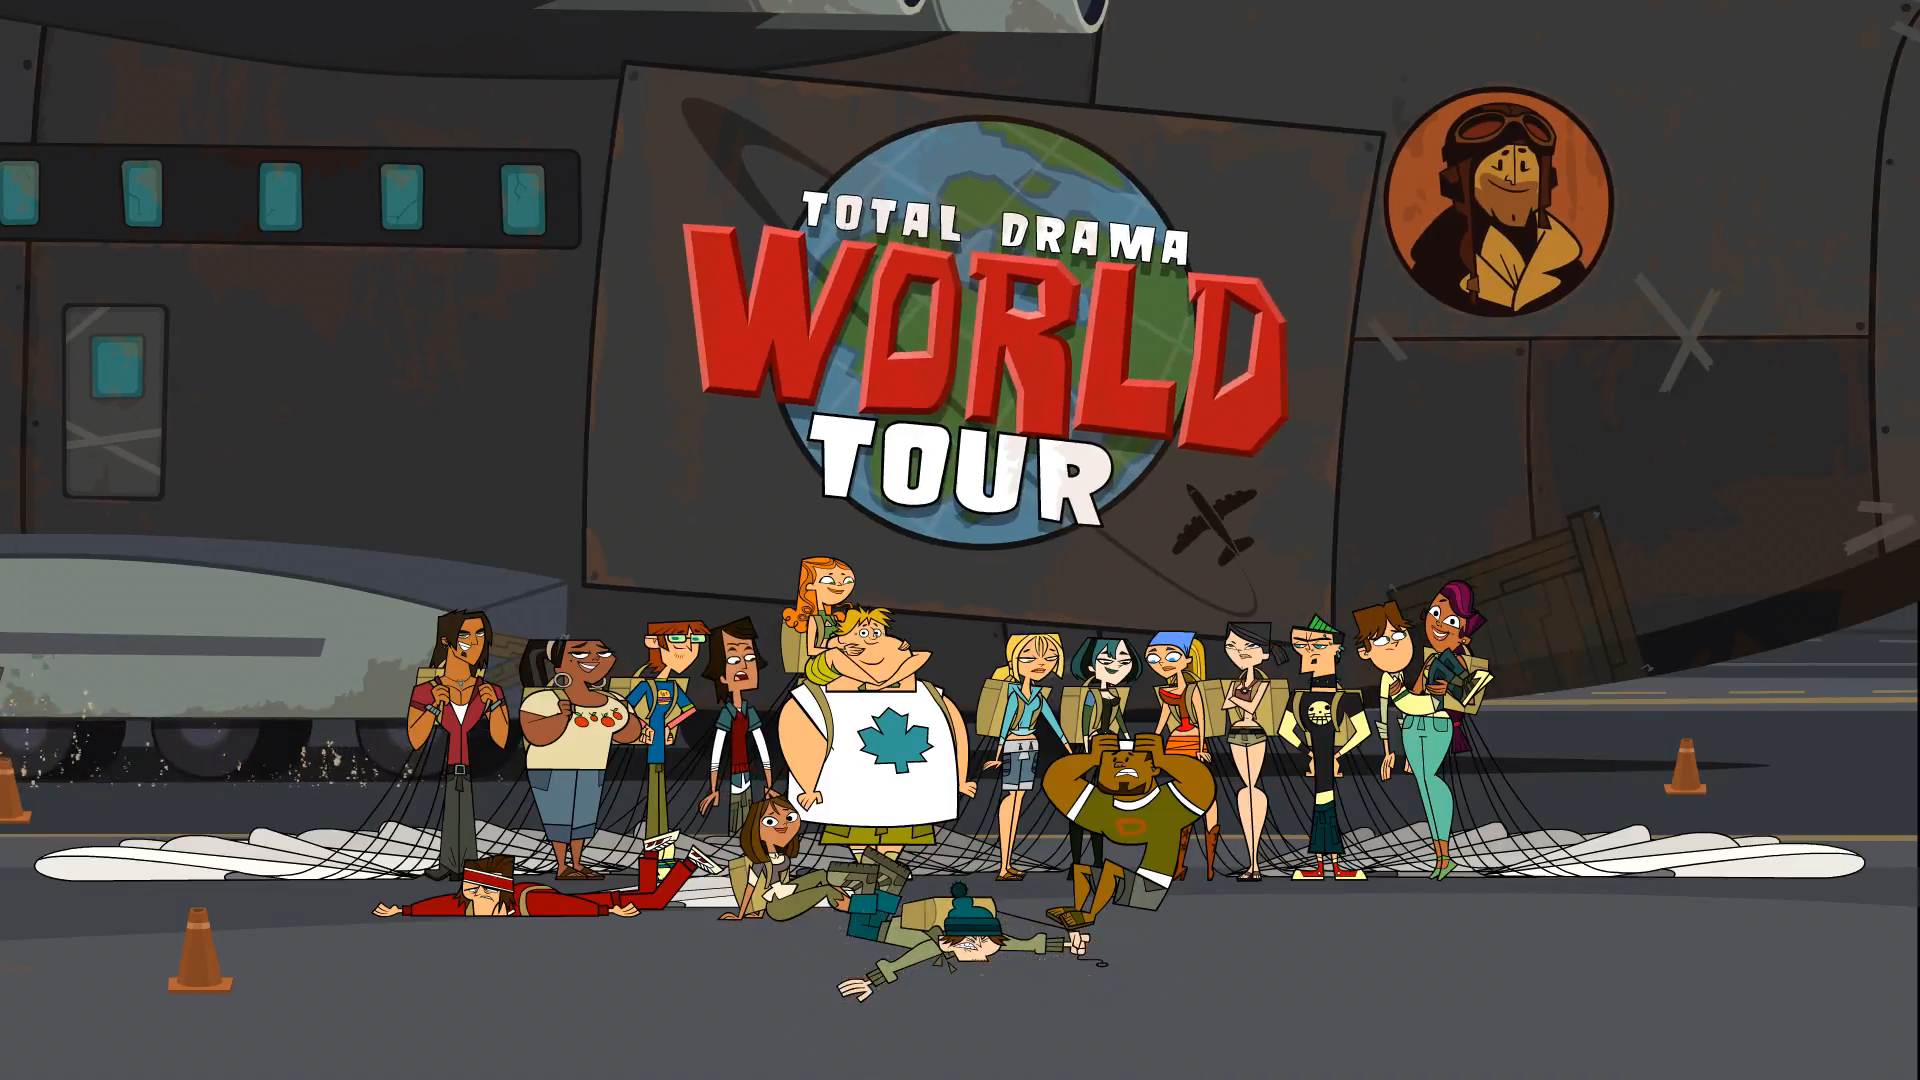 Total Drama World Tour - Wikipedia